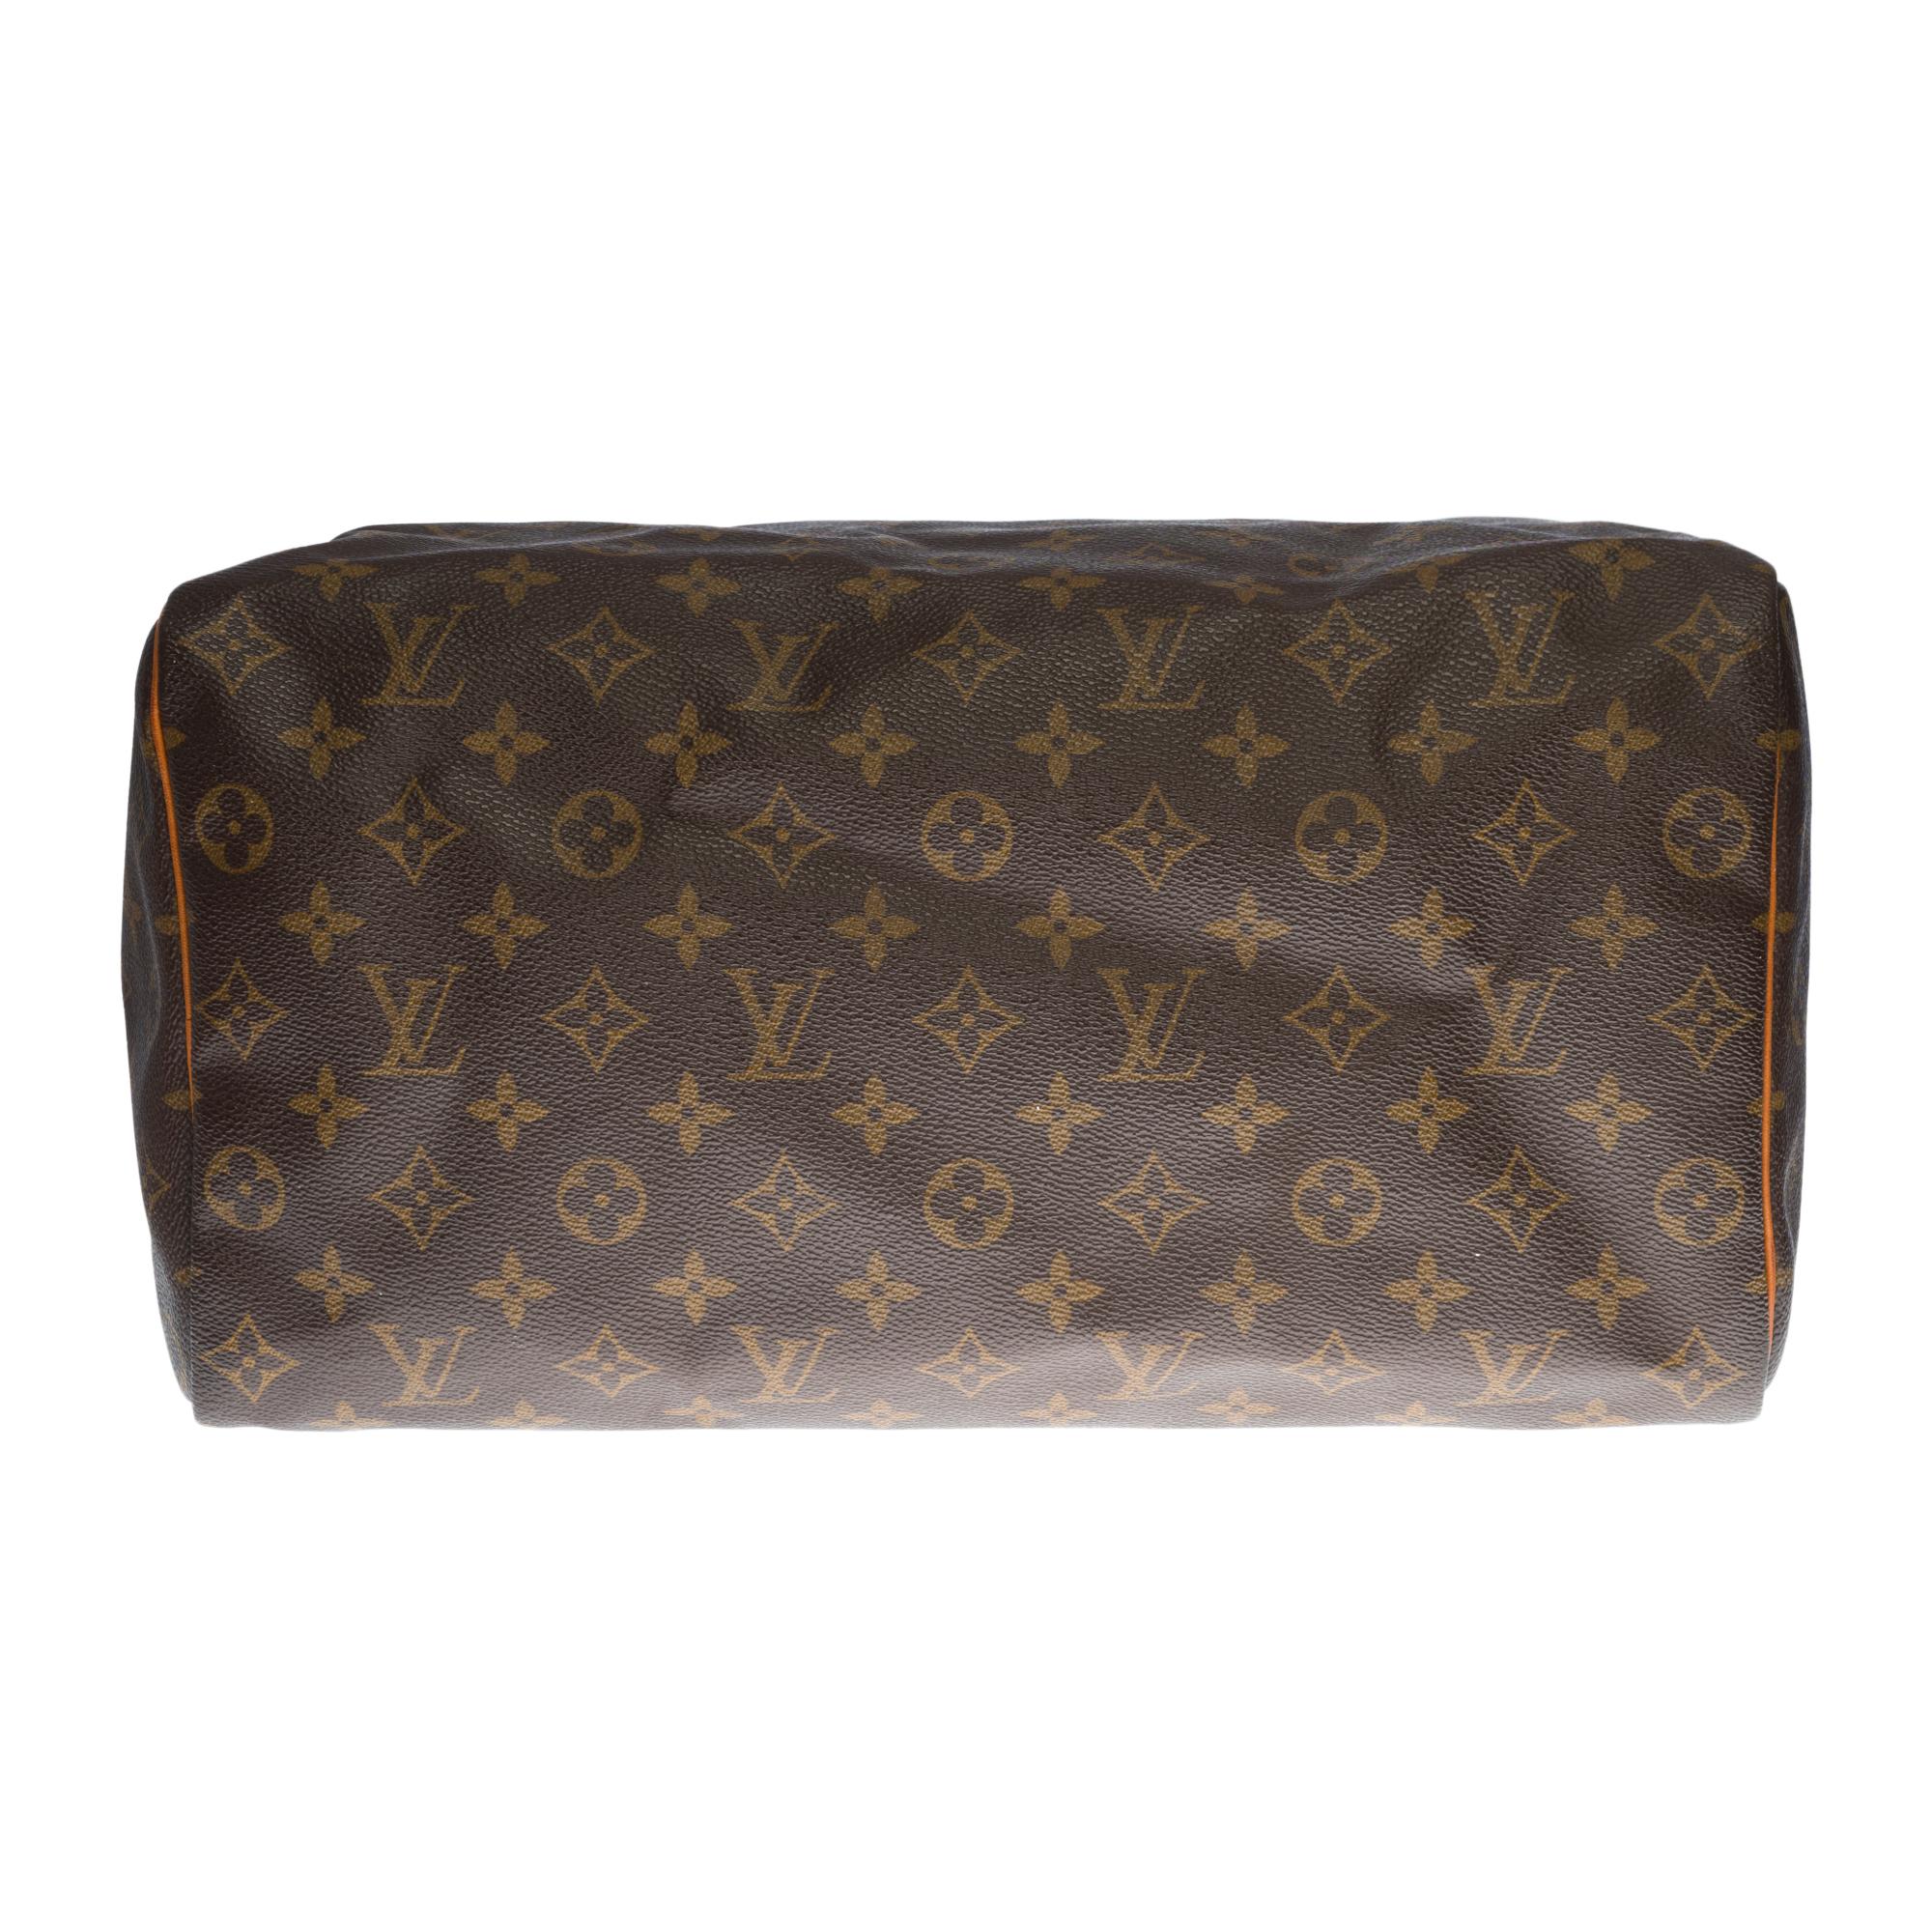 Louis Vuitton Speedy 35 handbag in brown canvas For Sale 4